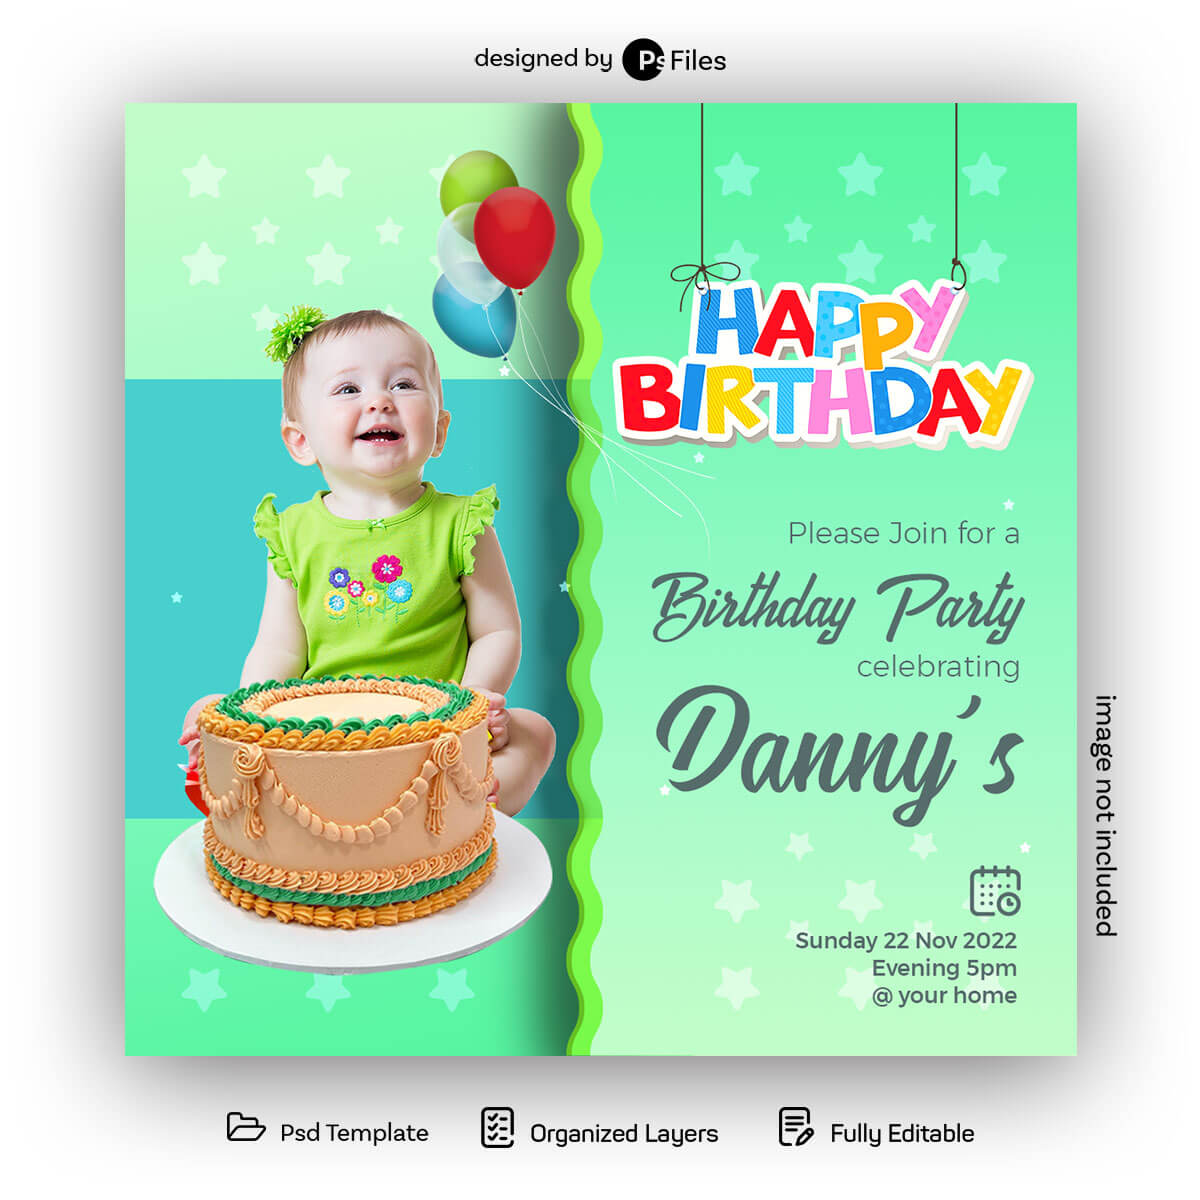 PsFiles Happy Birthday Party Invite Instagram Post Design Free PSD